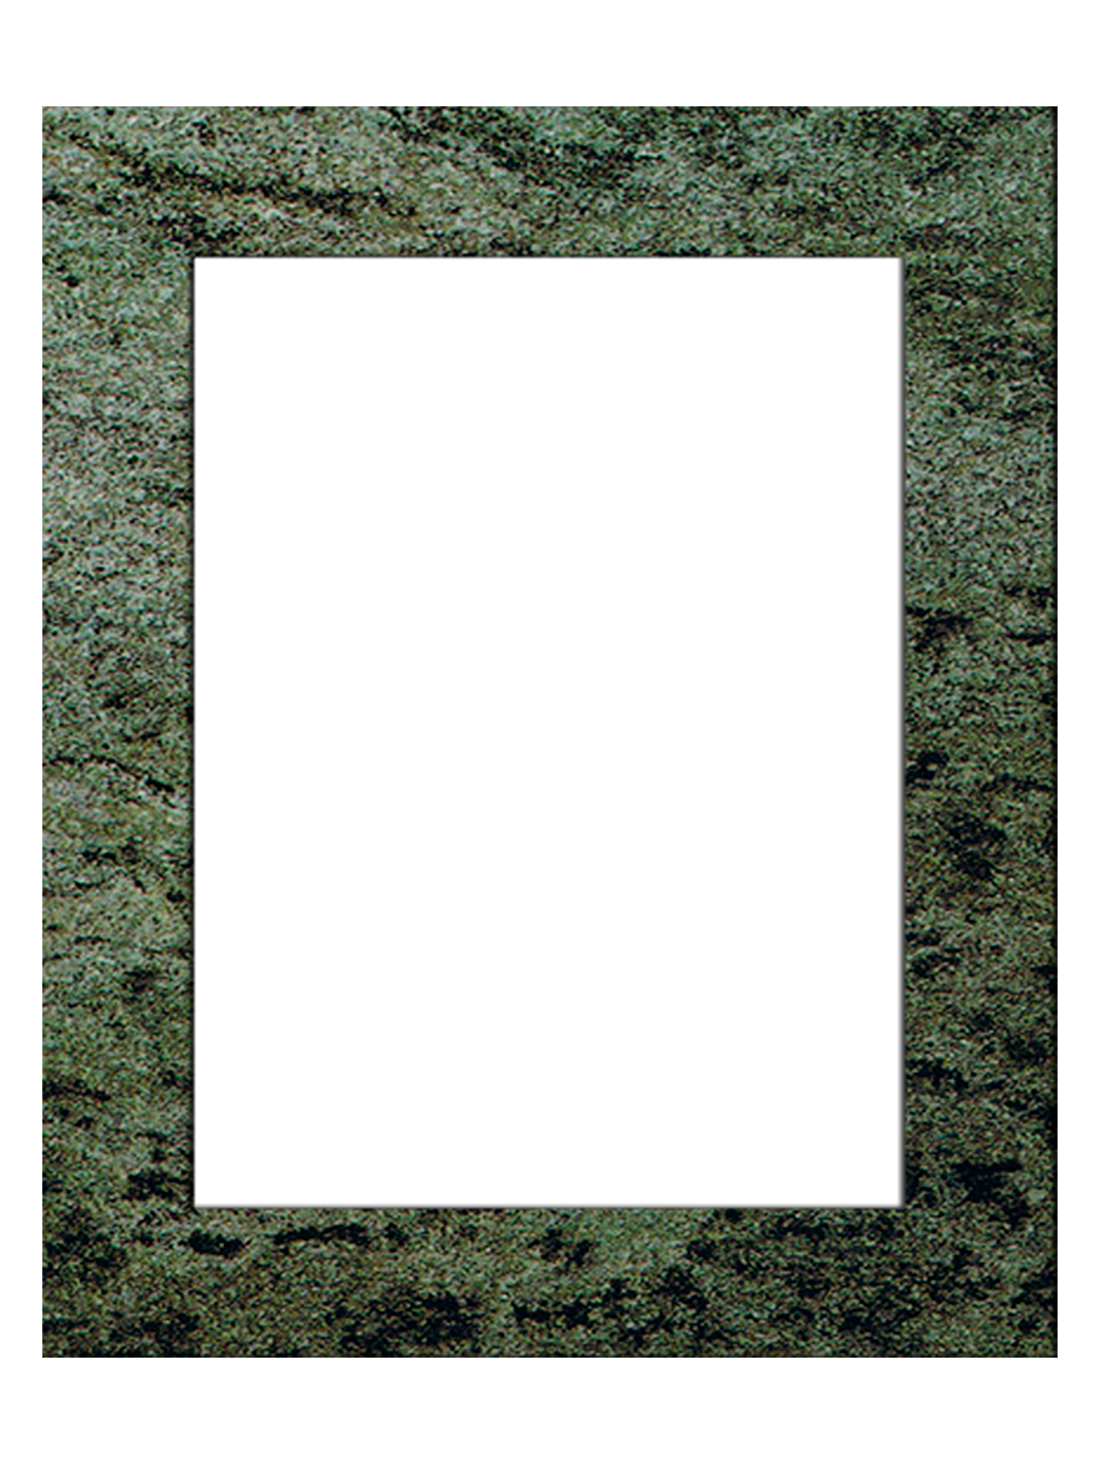 Fotocerámica rectangular con marco de granito